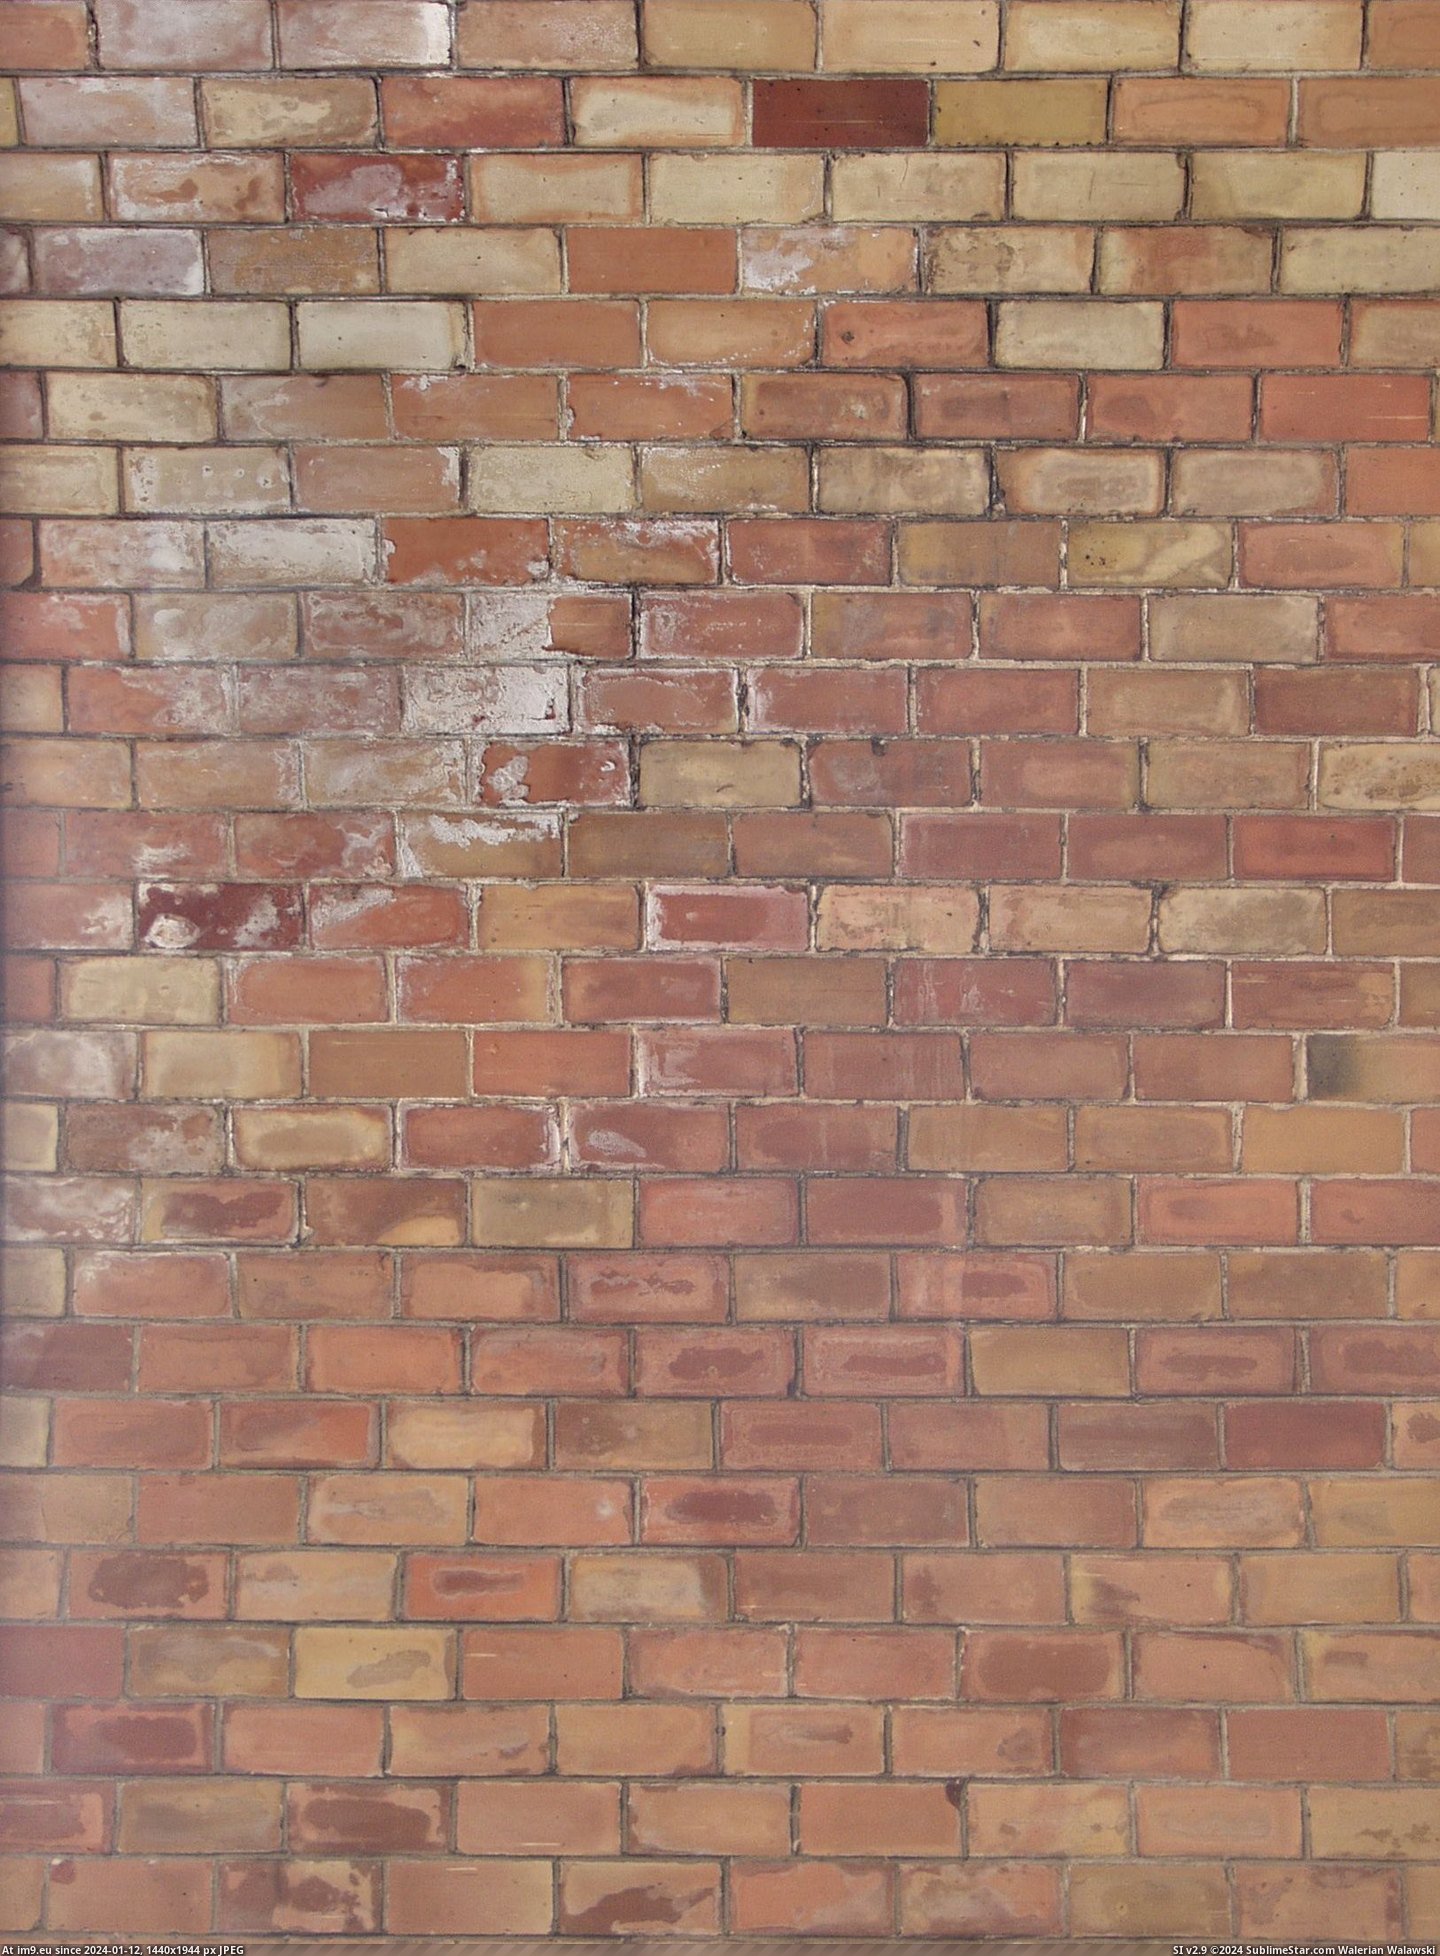 Brick Small Brown 2 (brick wall) (in Brick walls textures and wallpapers)